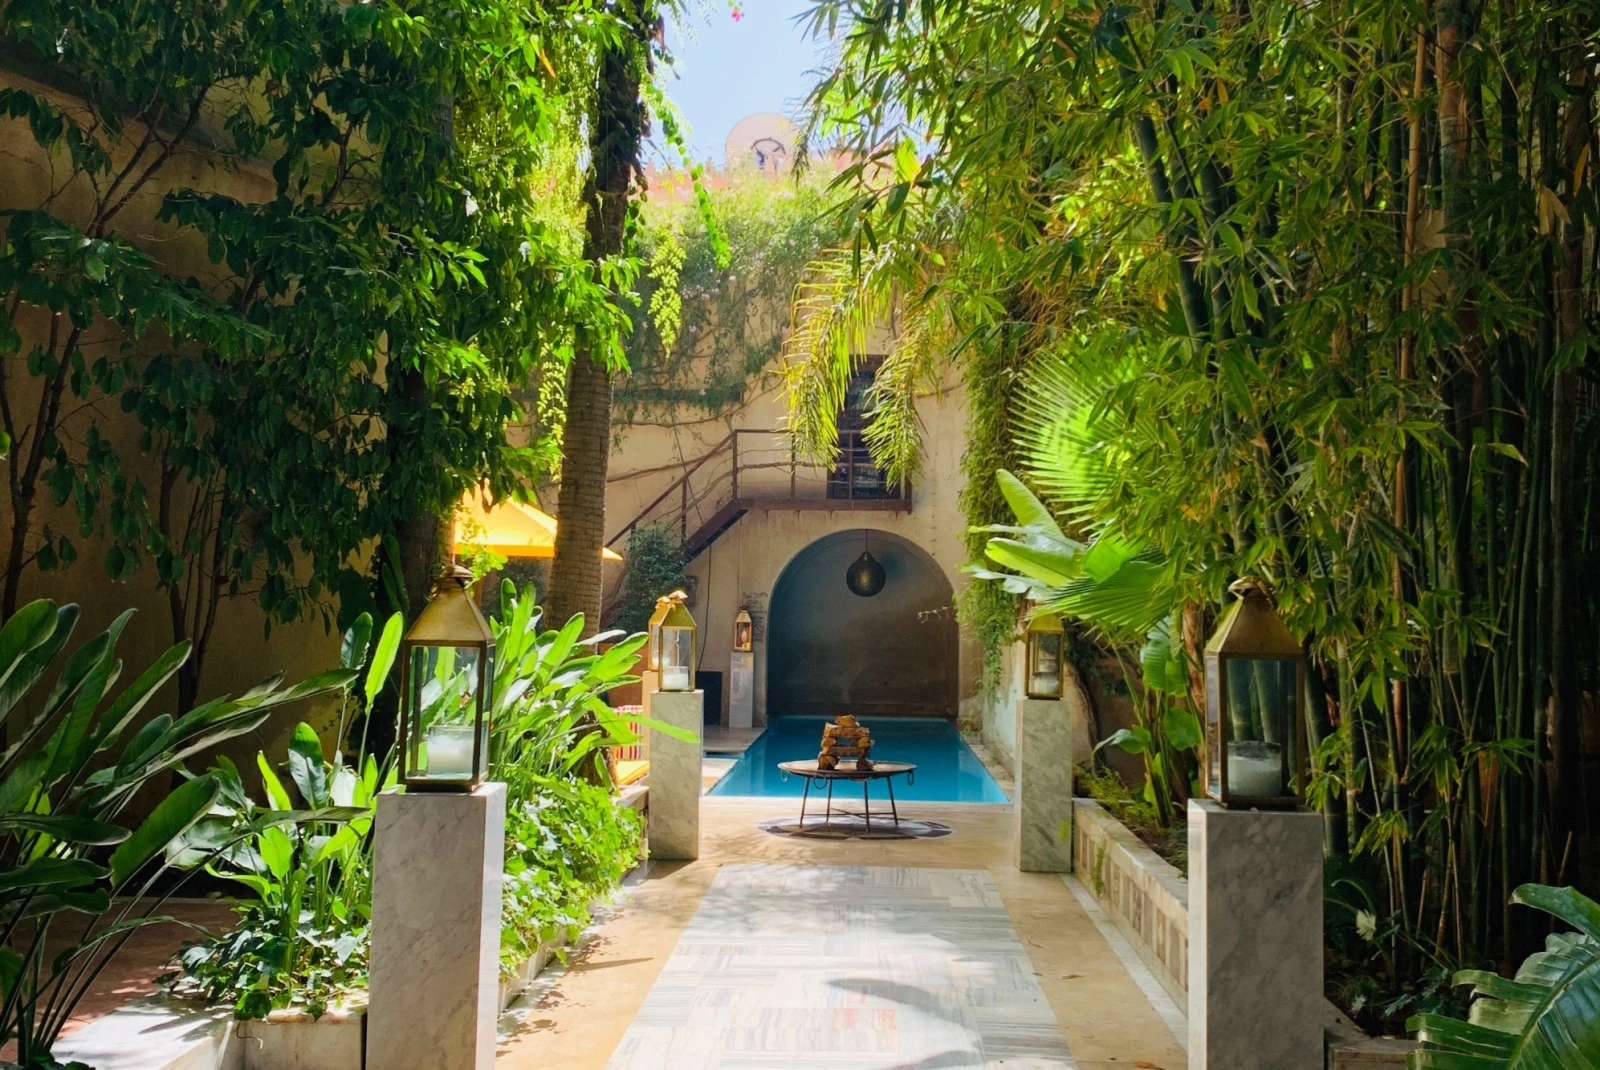 sunny pool amid a lush courtyard